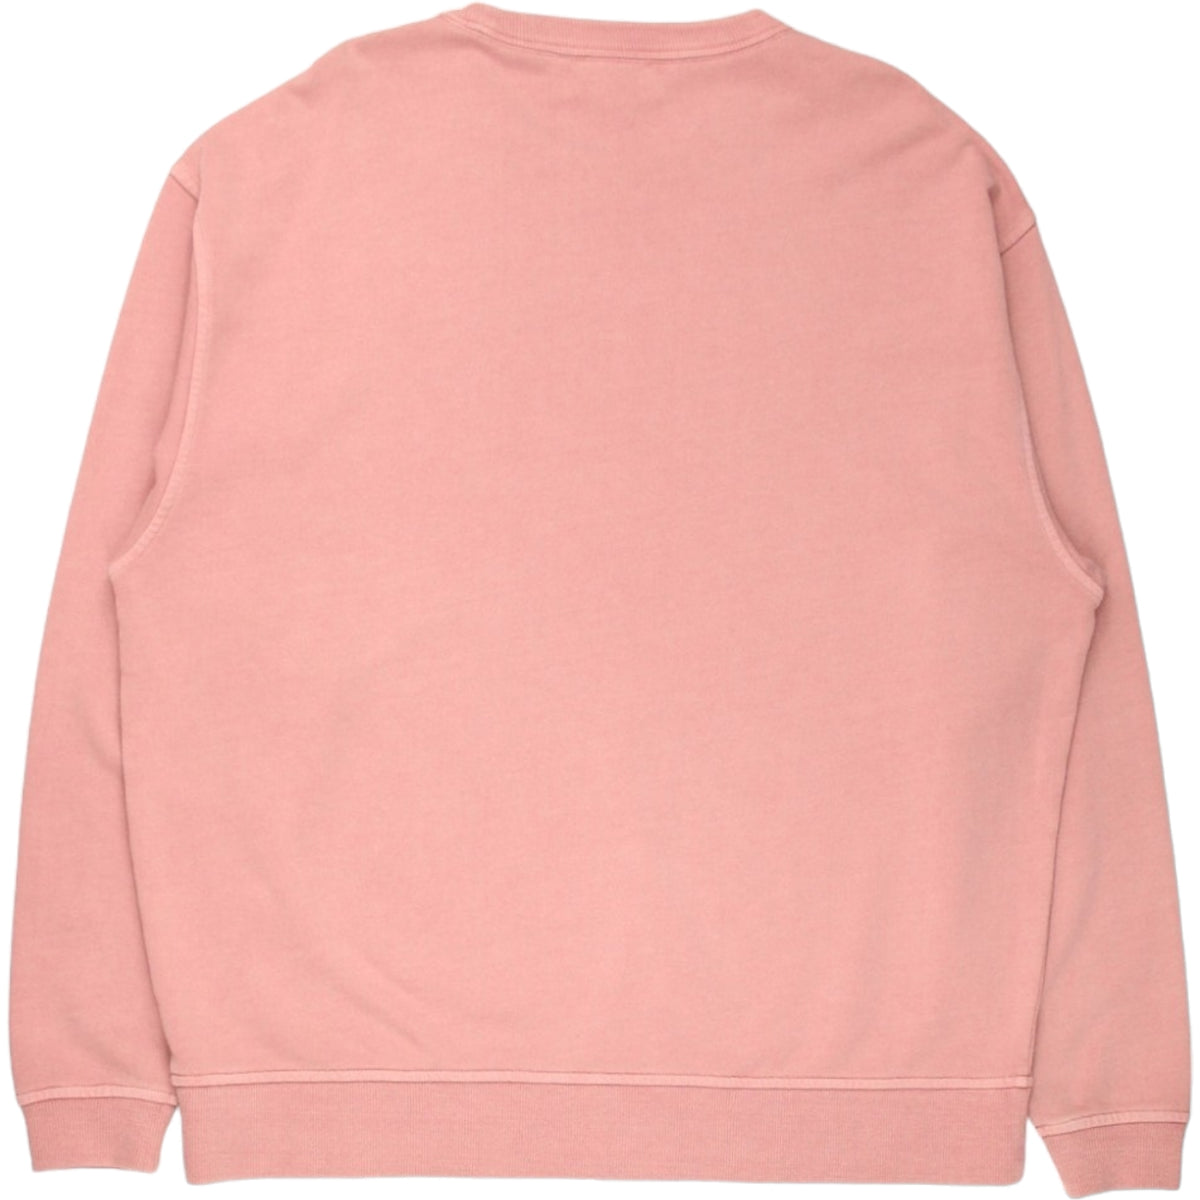 YMC Plaster Pink Sweatshirt